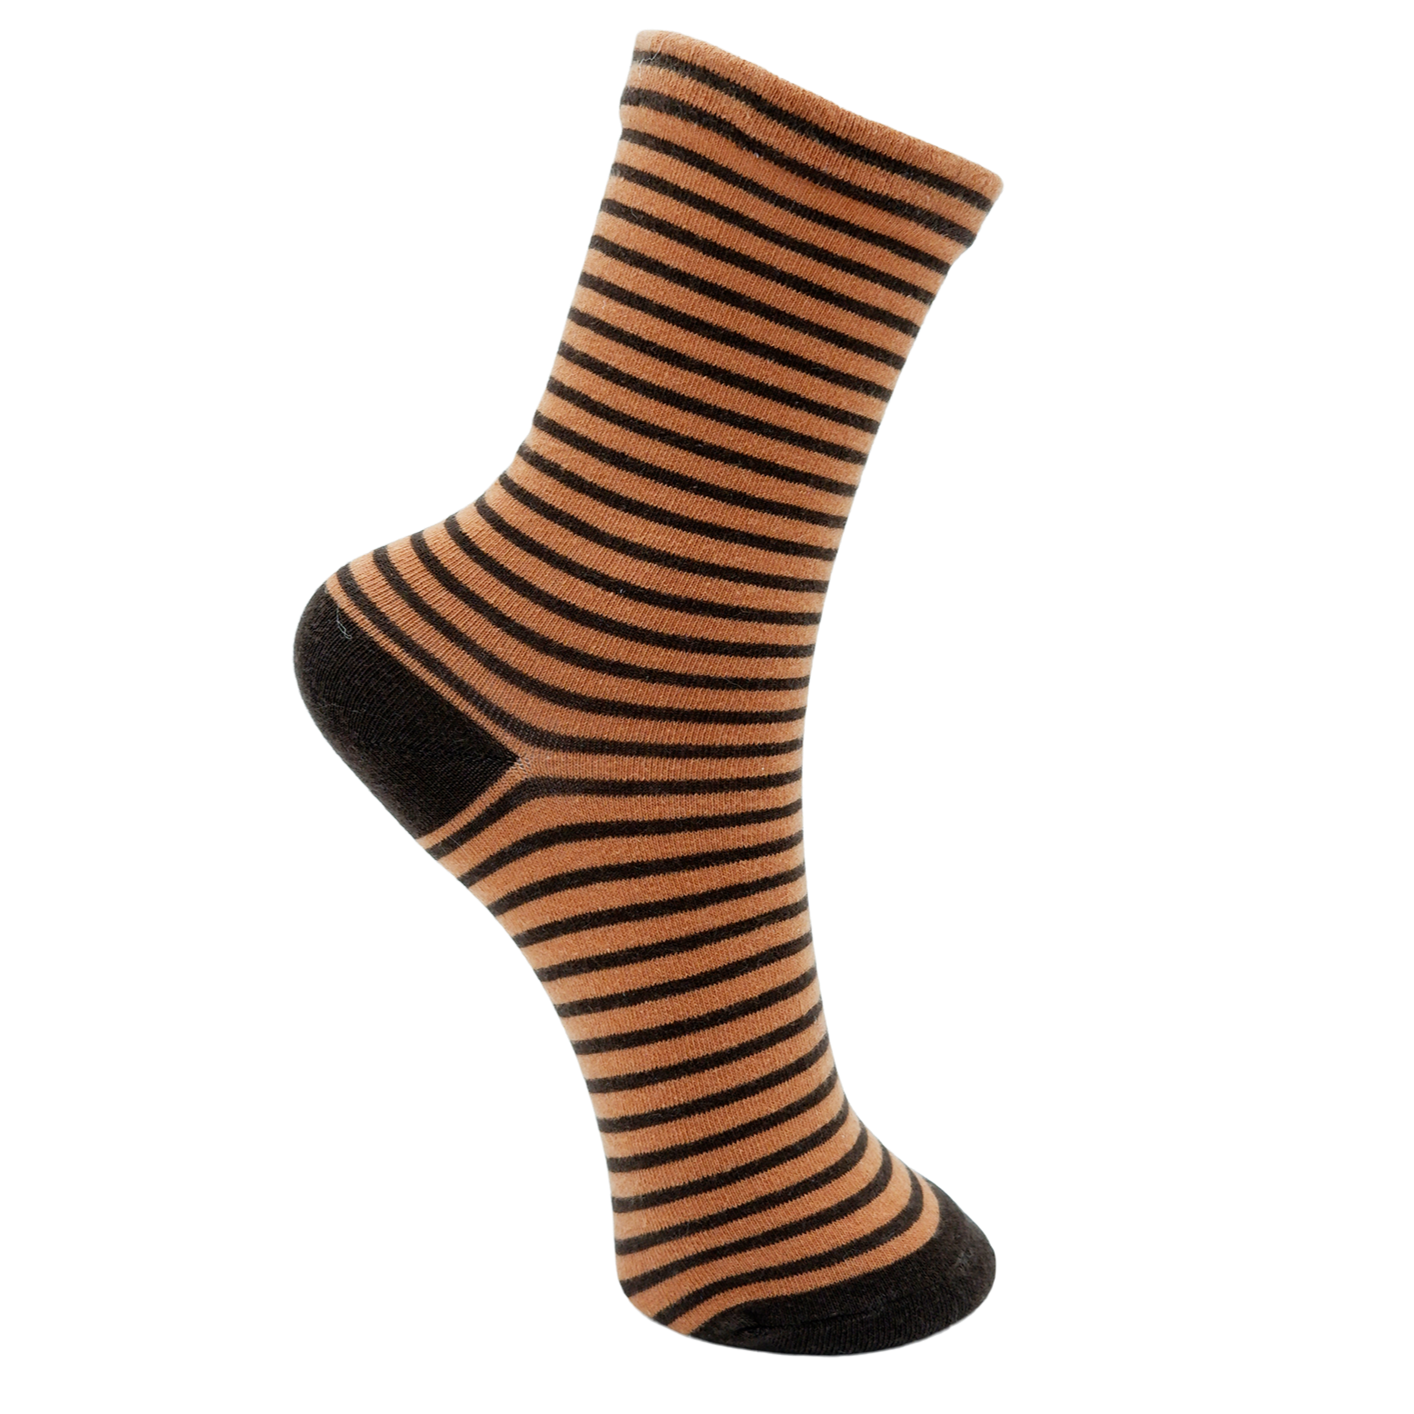 Brown/Orange Striped Socks by Black Colour